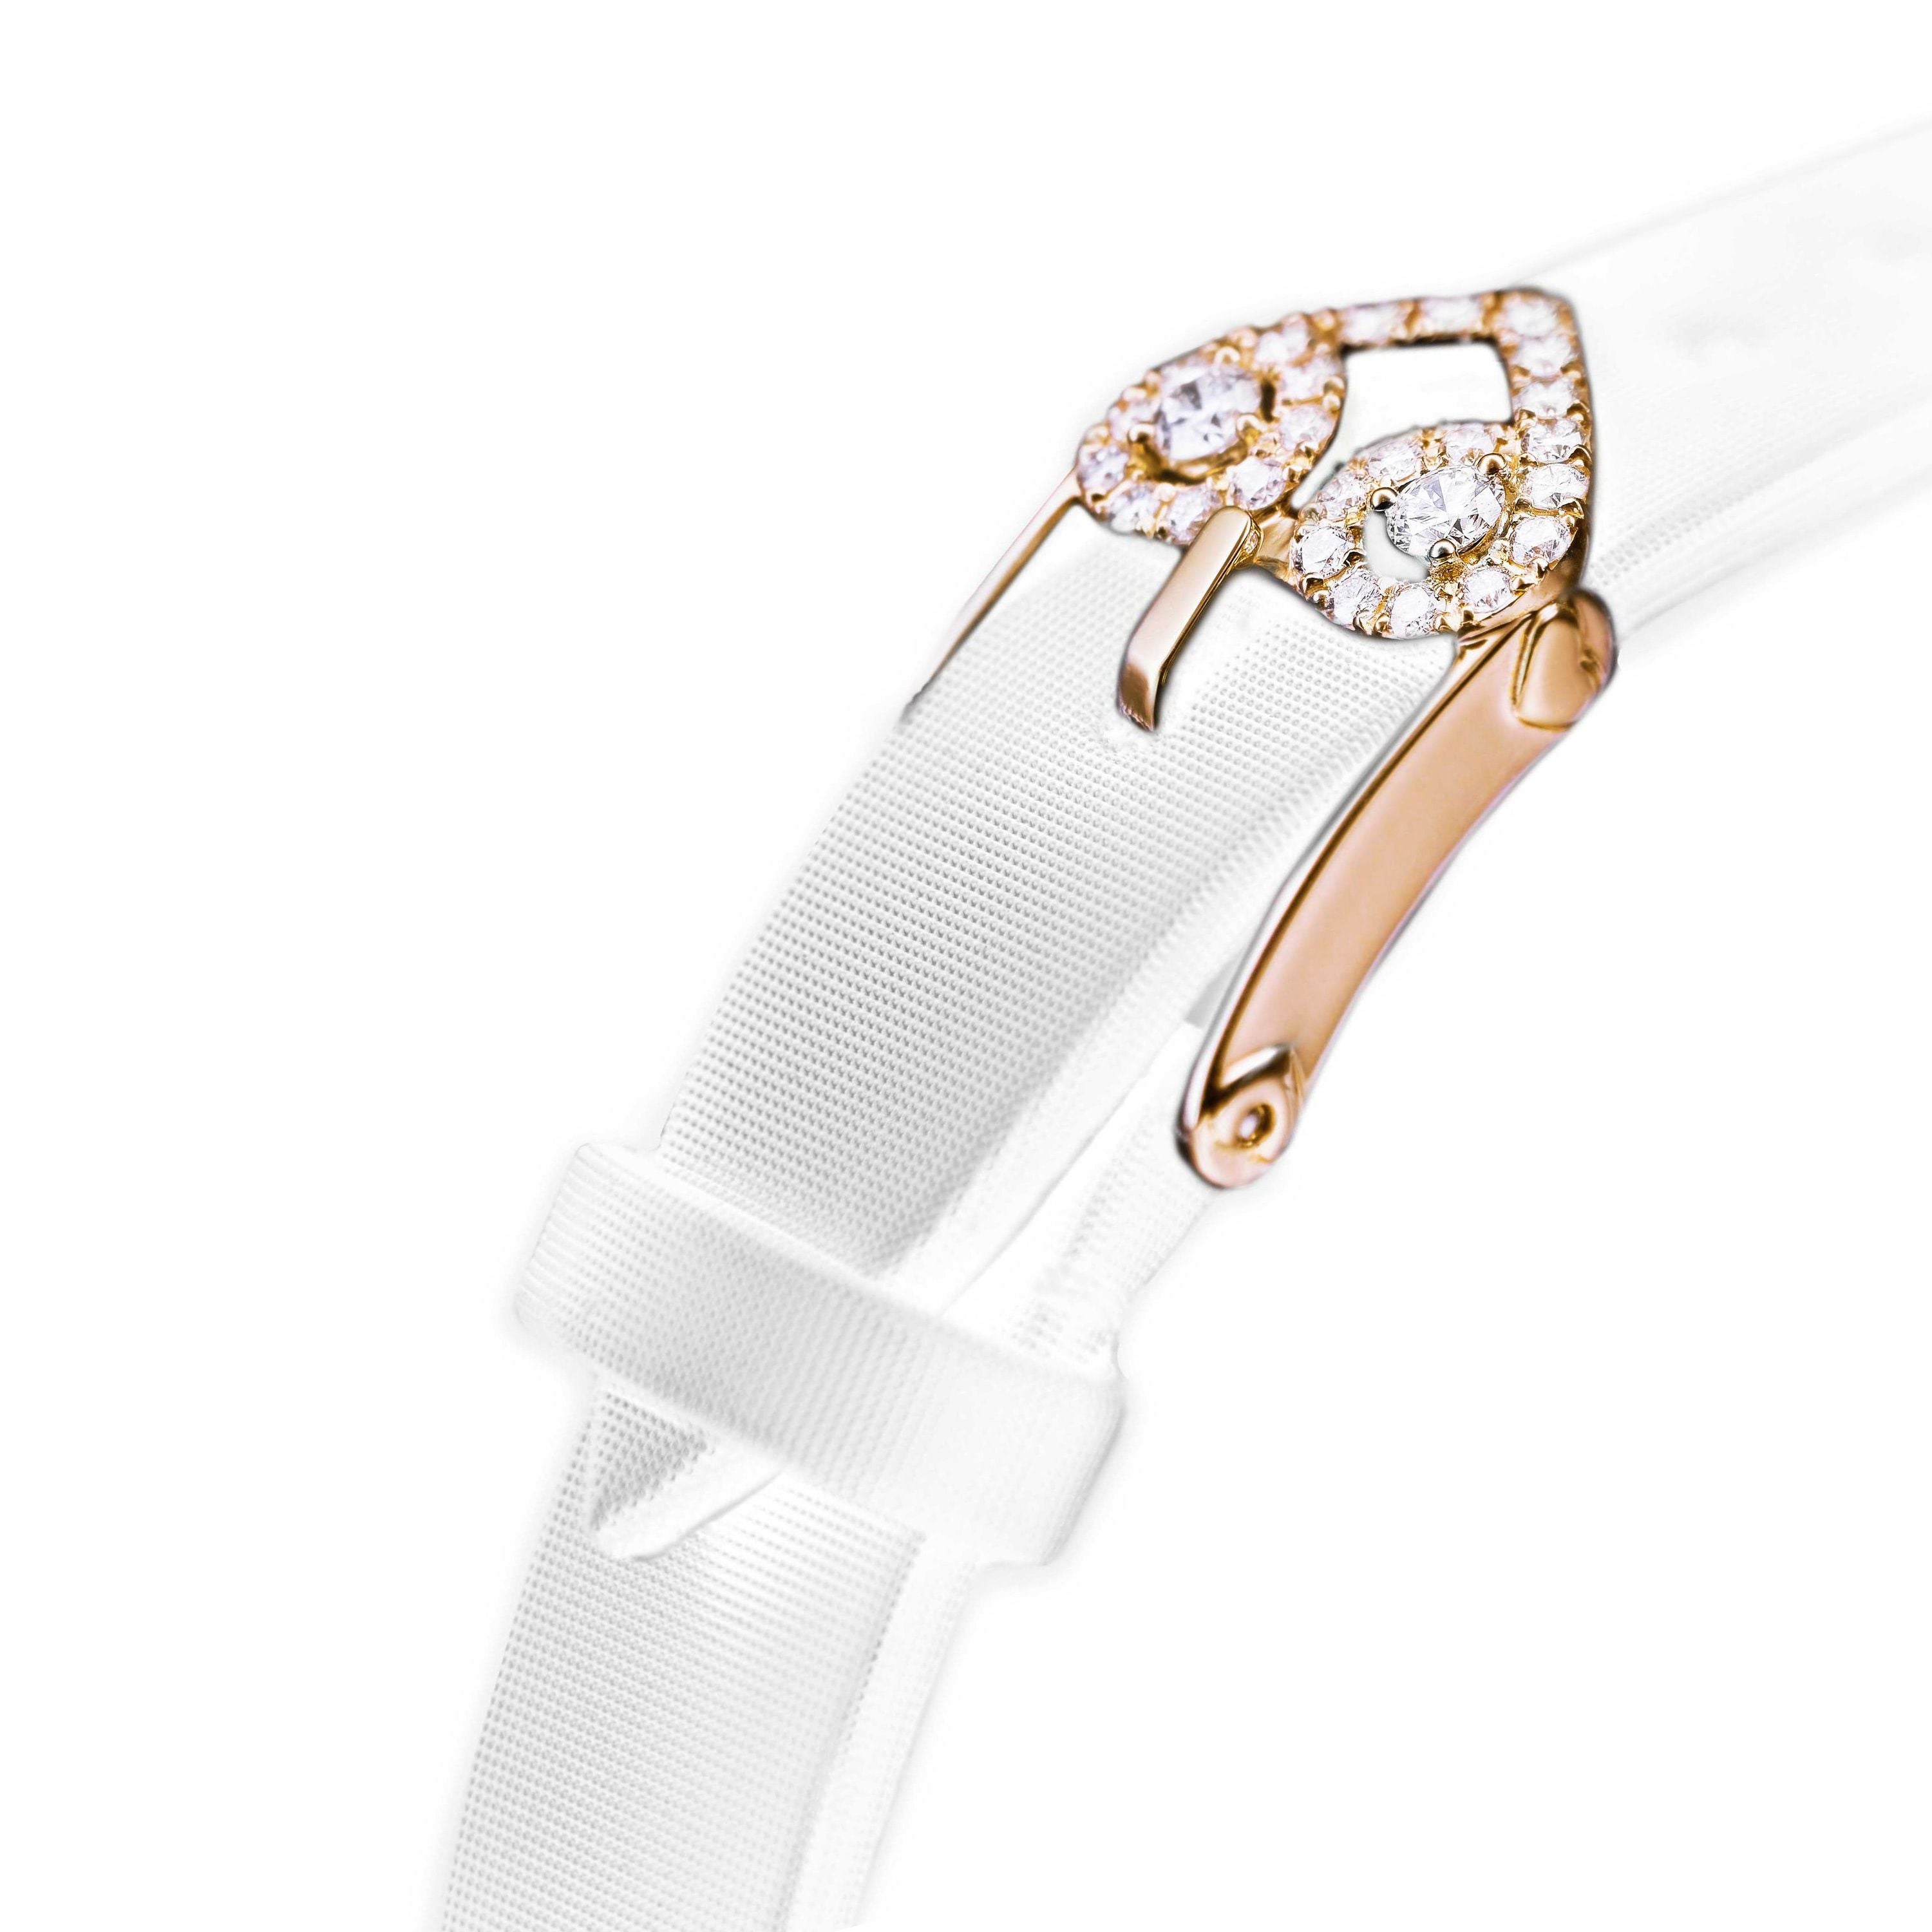 Backes & Strauss - Victoria Snowdrop Luxury Diamond Watch for Women - Rose Gold  - Buckle